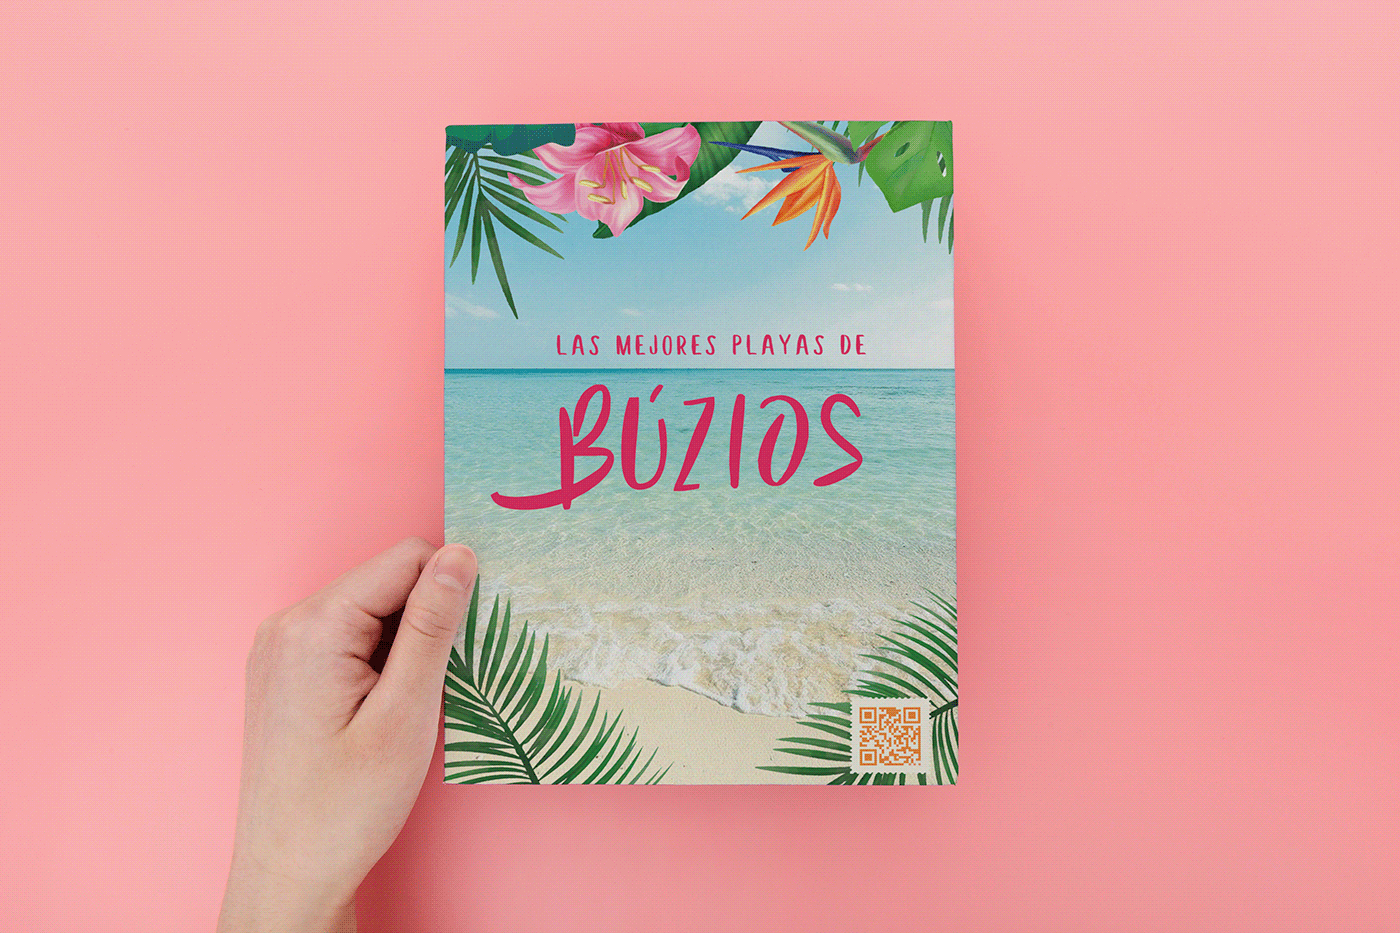 Brasil brochure buzios playa Turismo infographic Nature forest ilustracion turism